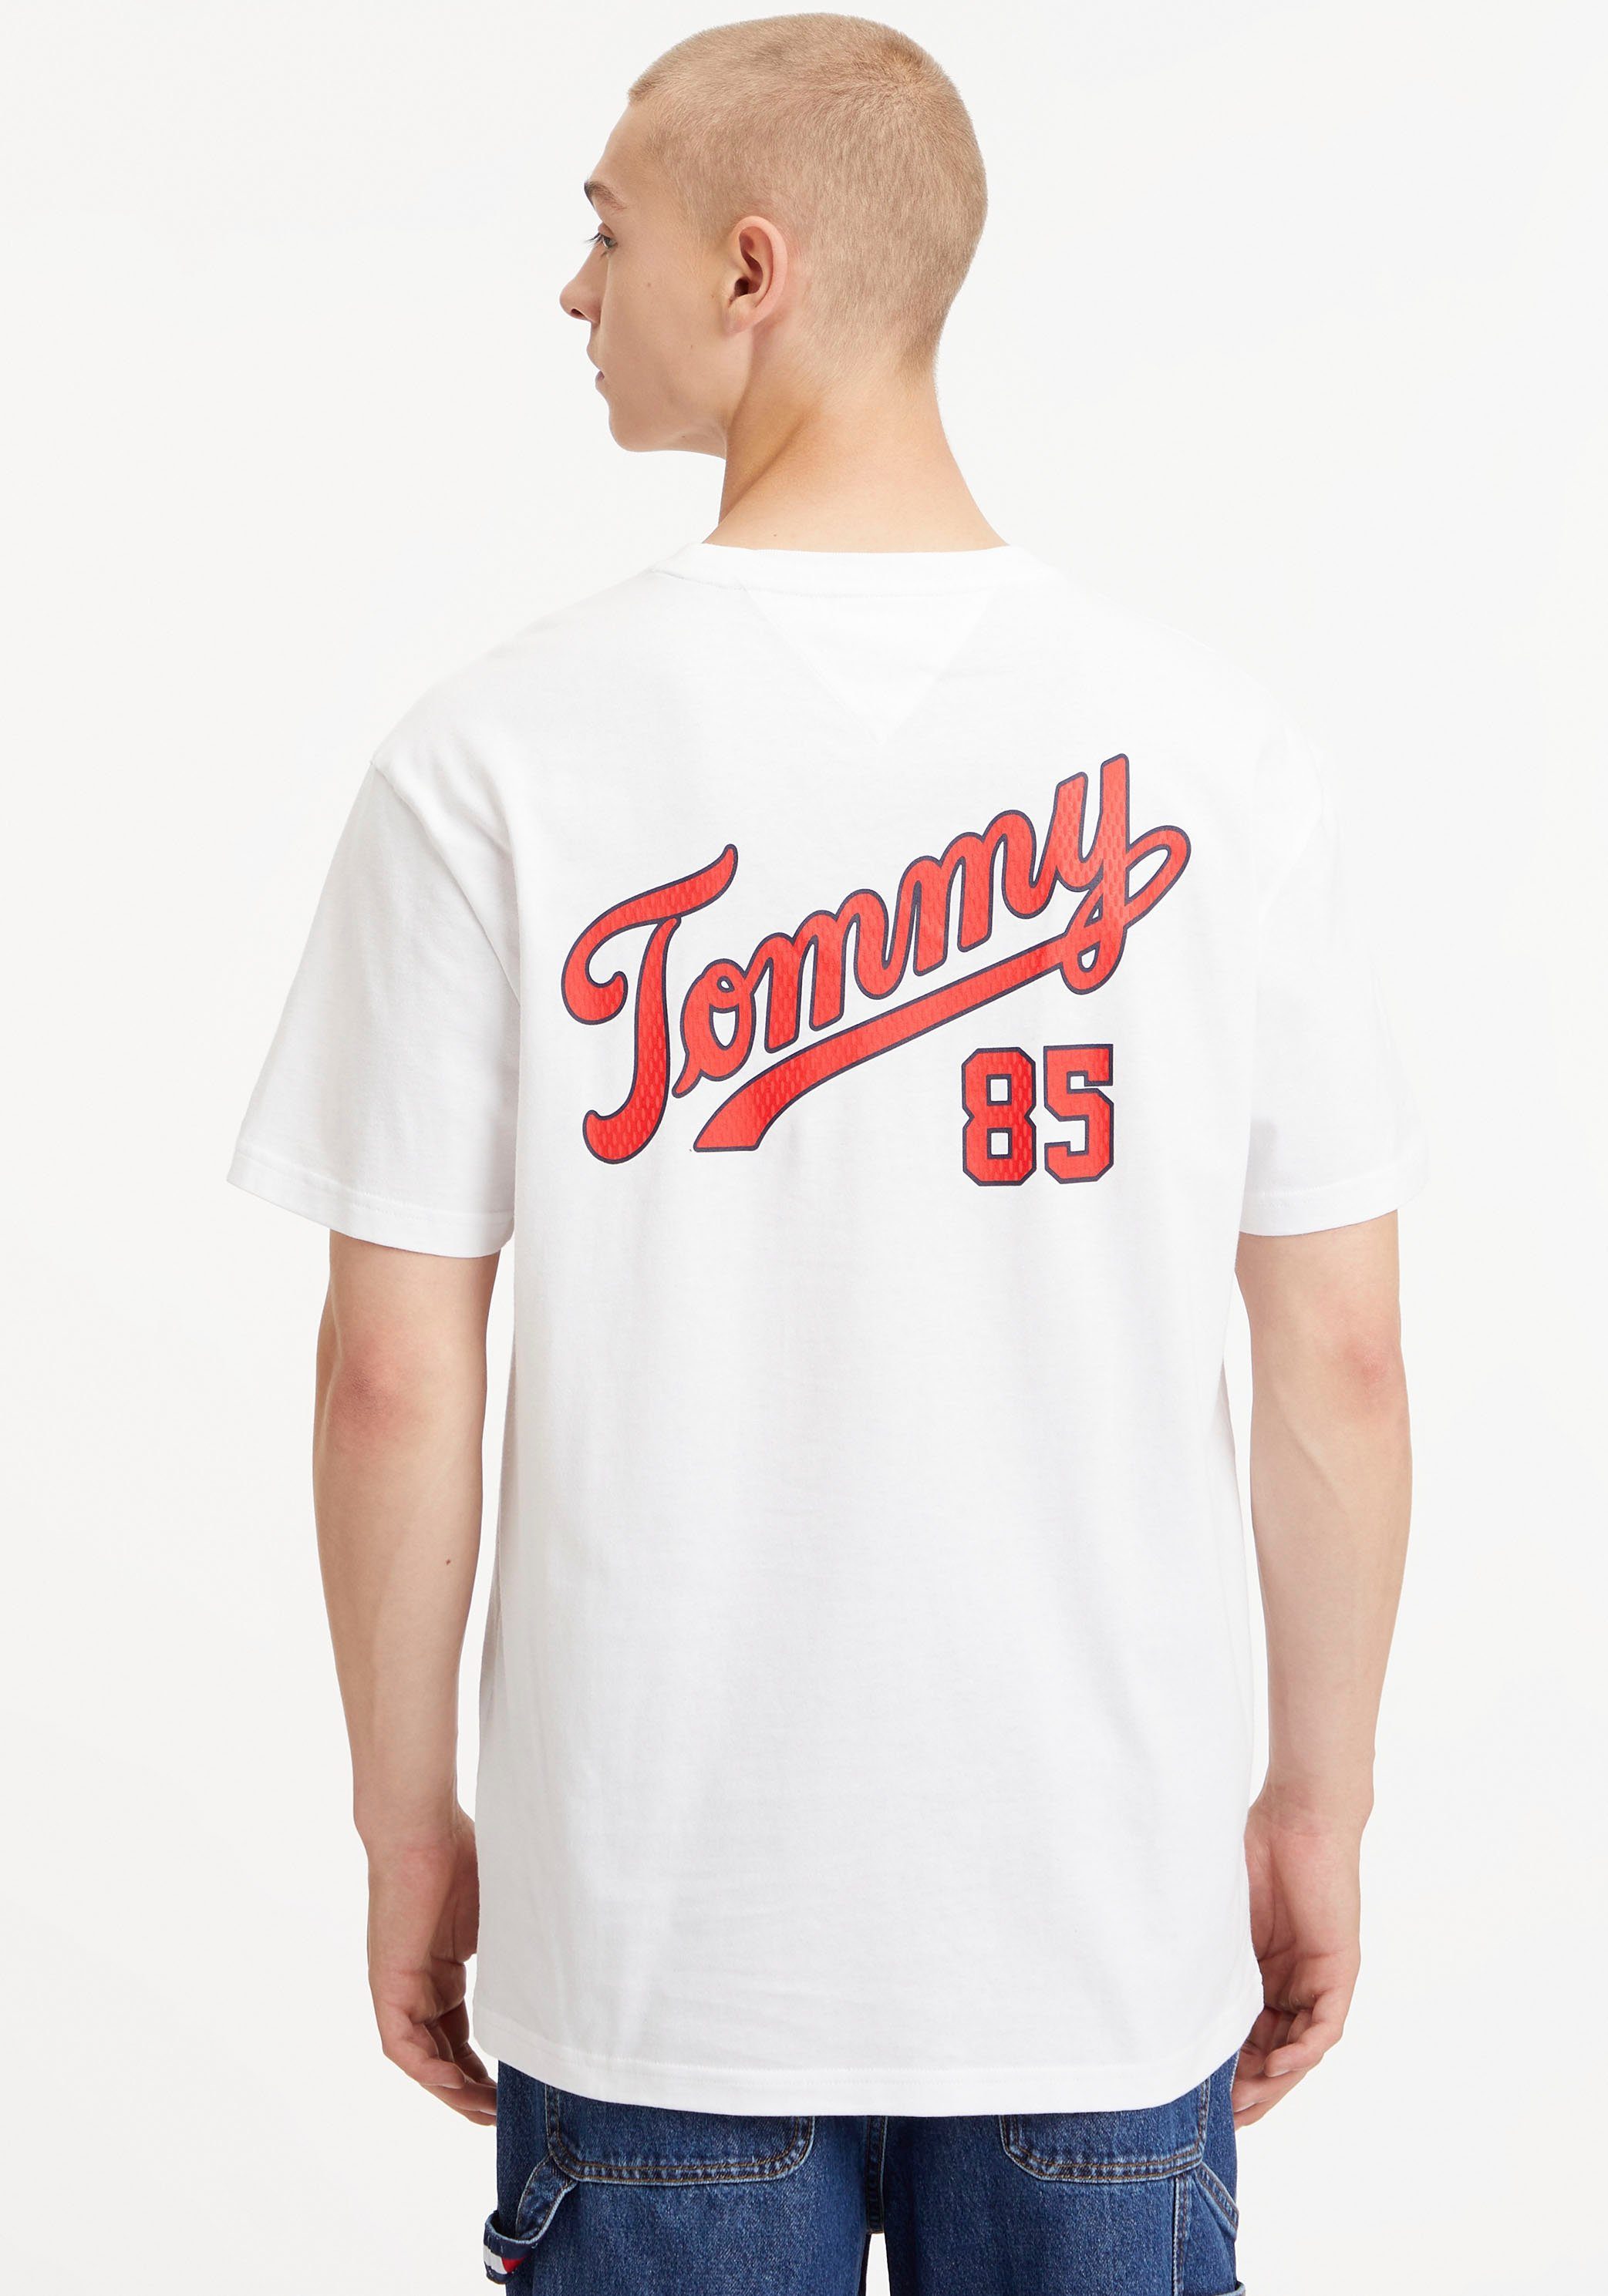 Tommy Jeans T-Shirt TJM CLSC COLLEGE mit White 85 Logoprint LOGO TEE